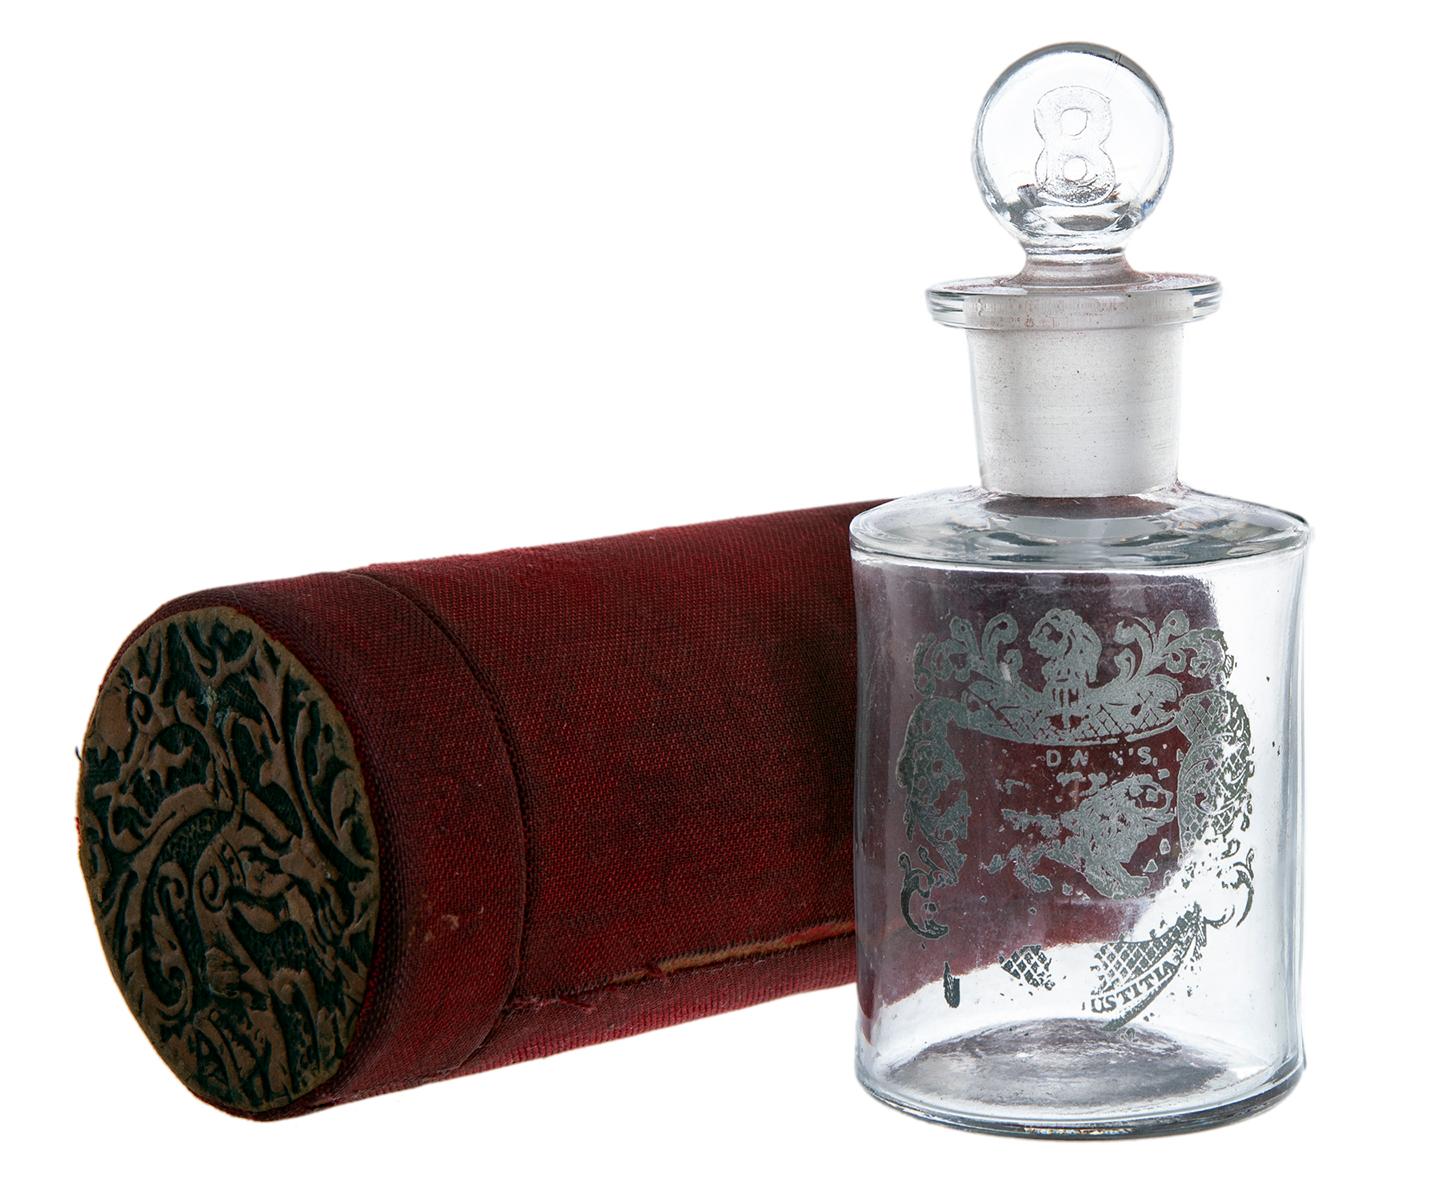 Early midcentury French perfume bottle with original stopper & worn velvet case.